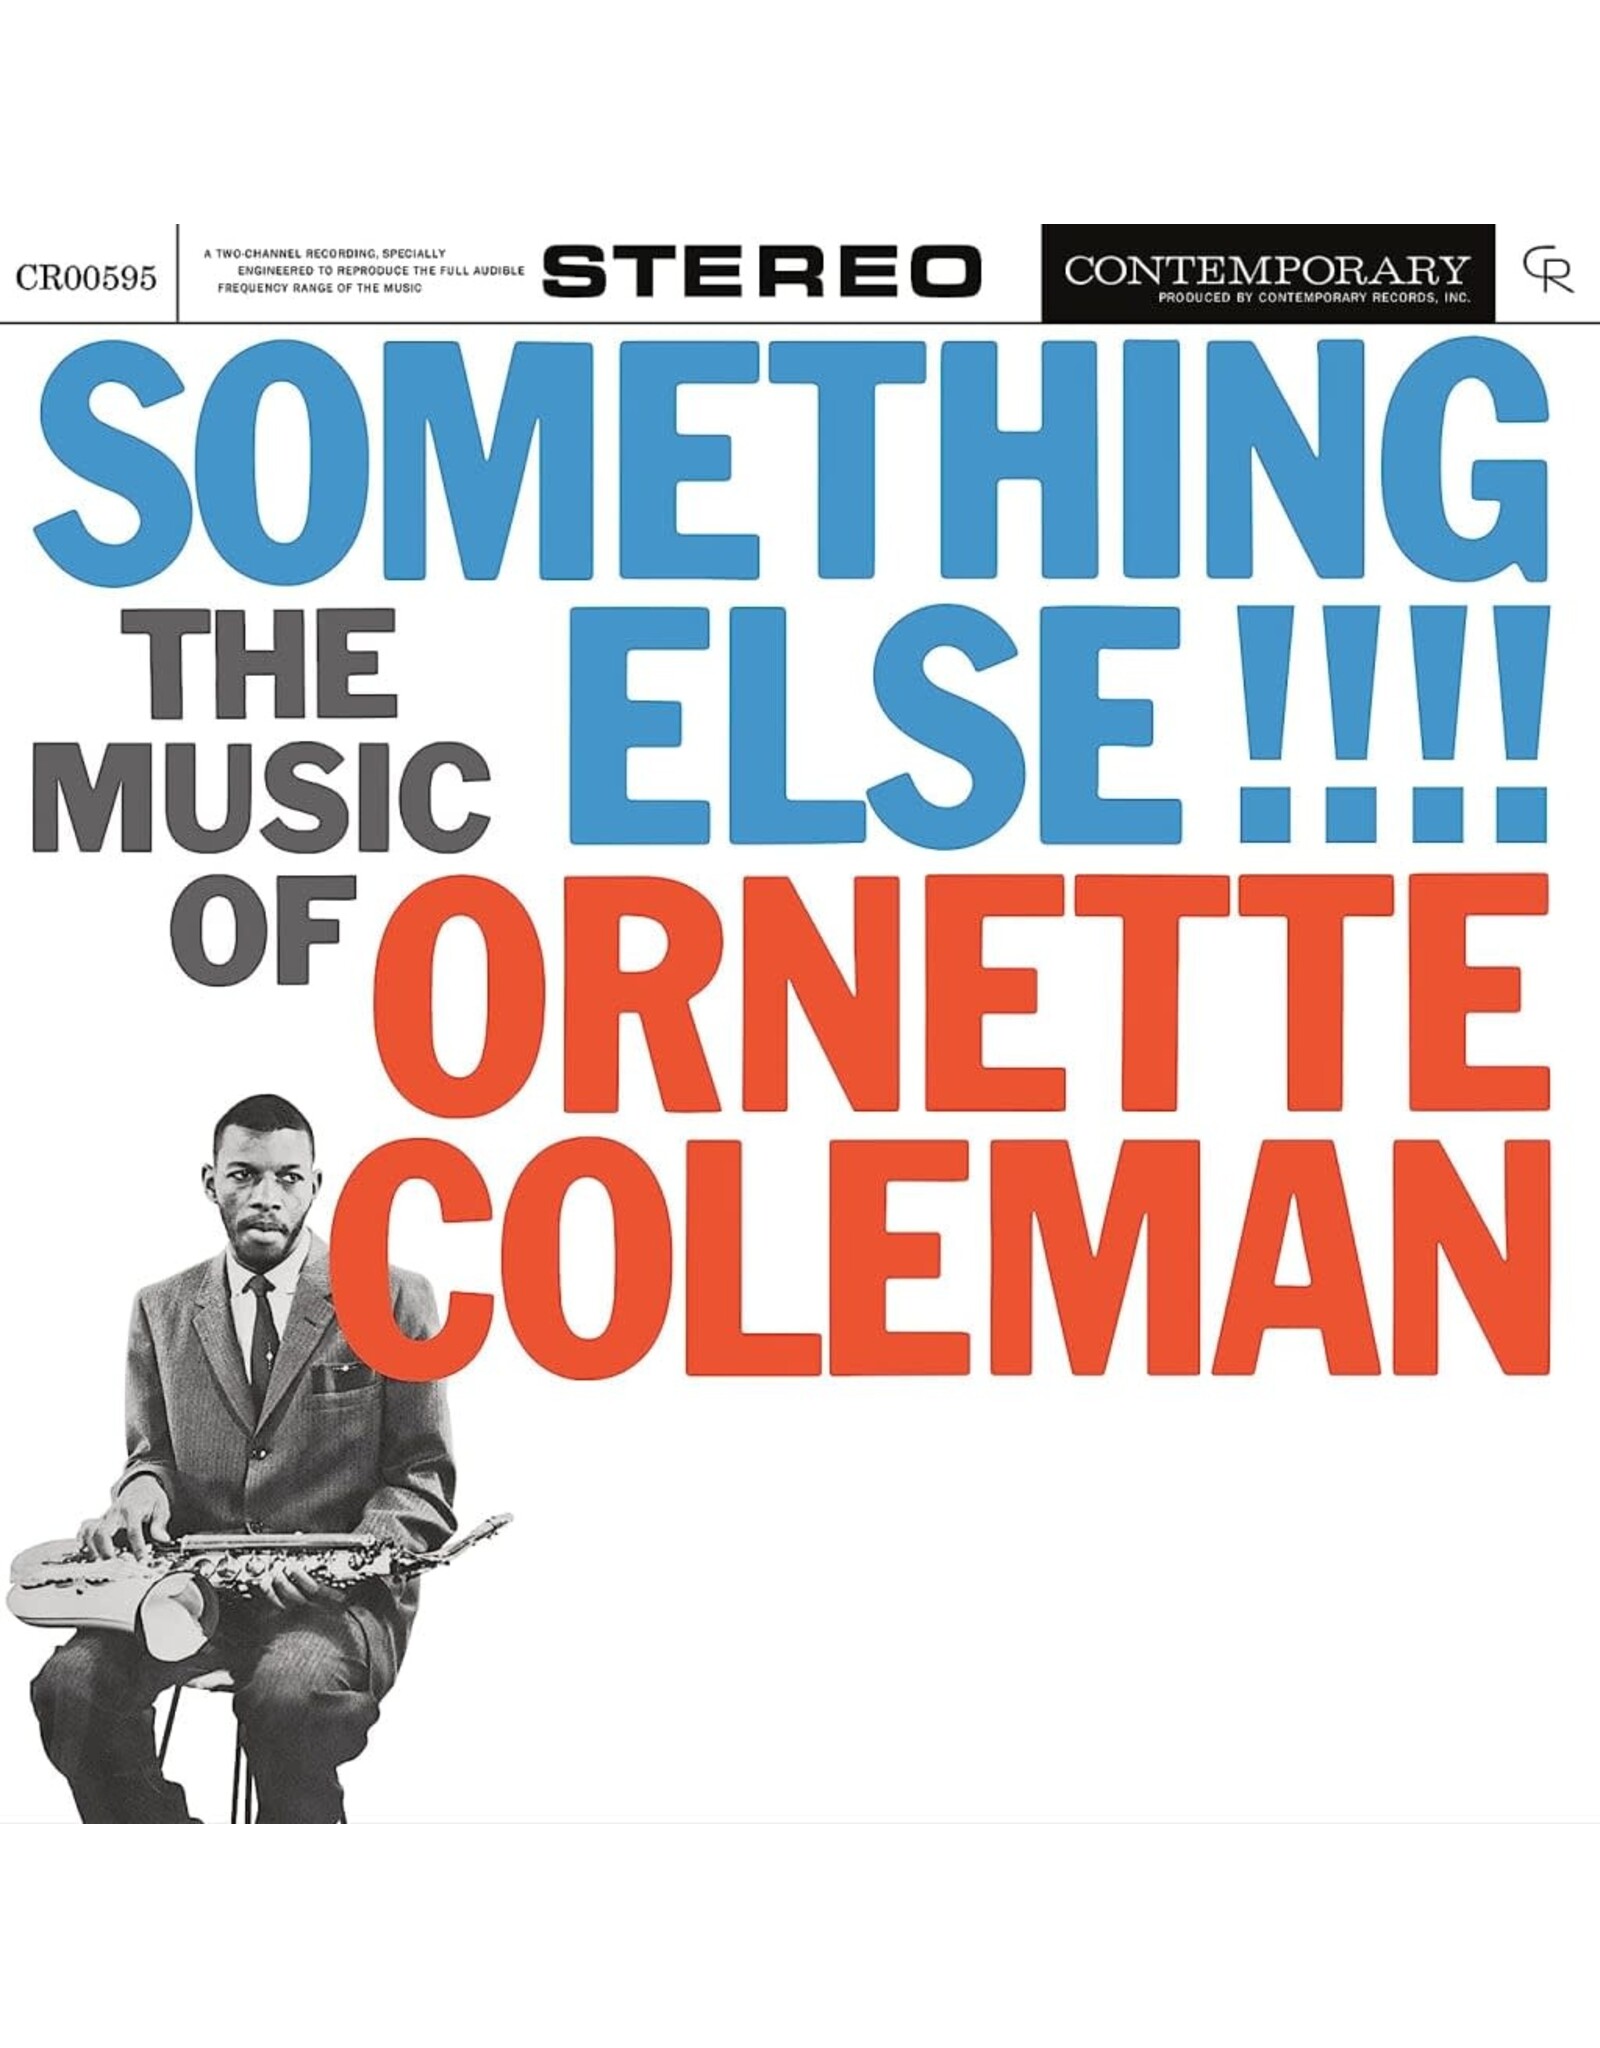 Ornette Coleman - Something Else!!!! (Acoustic Sounds Series)